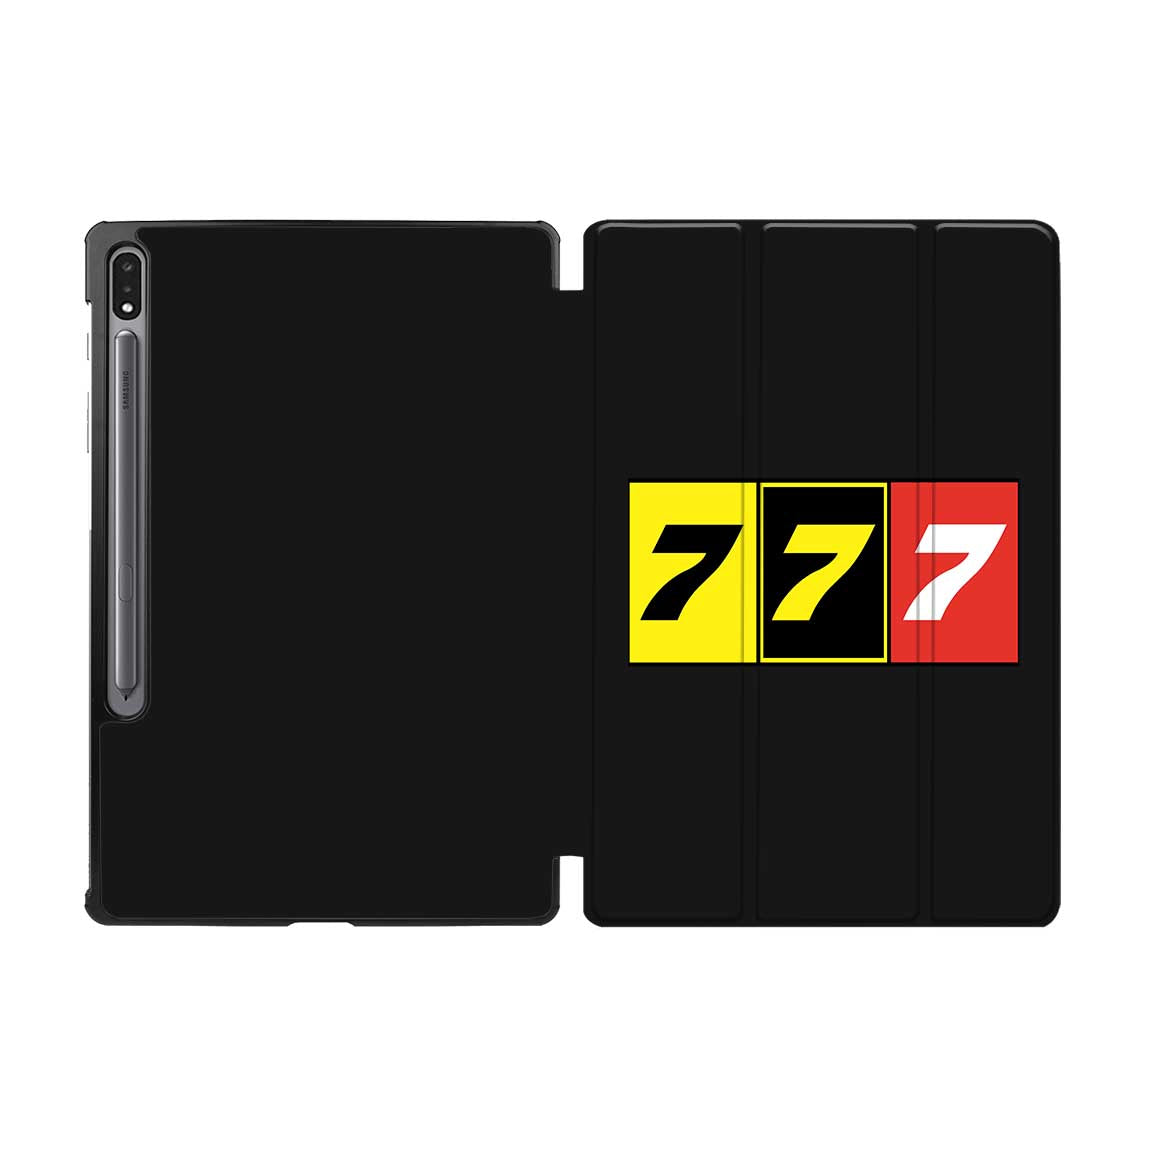 Flat Colourful 777 Designed Samsung Tablet Cases